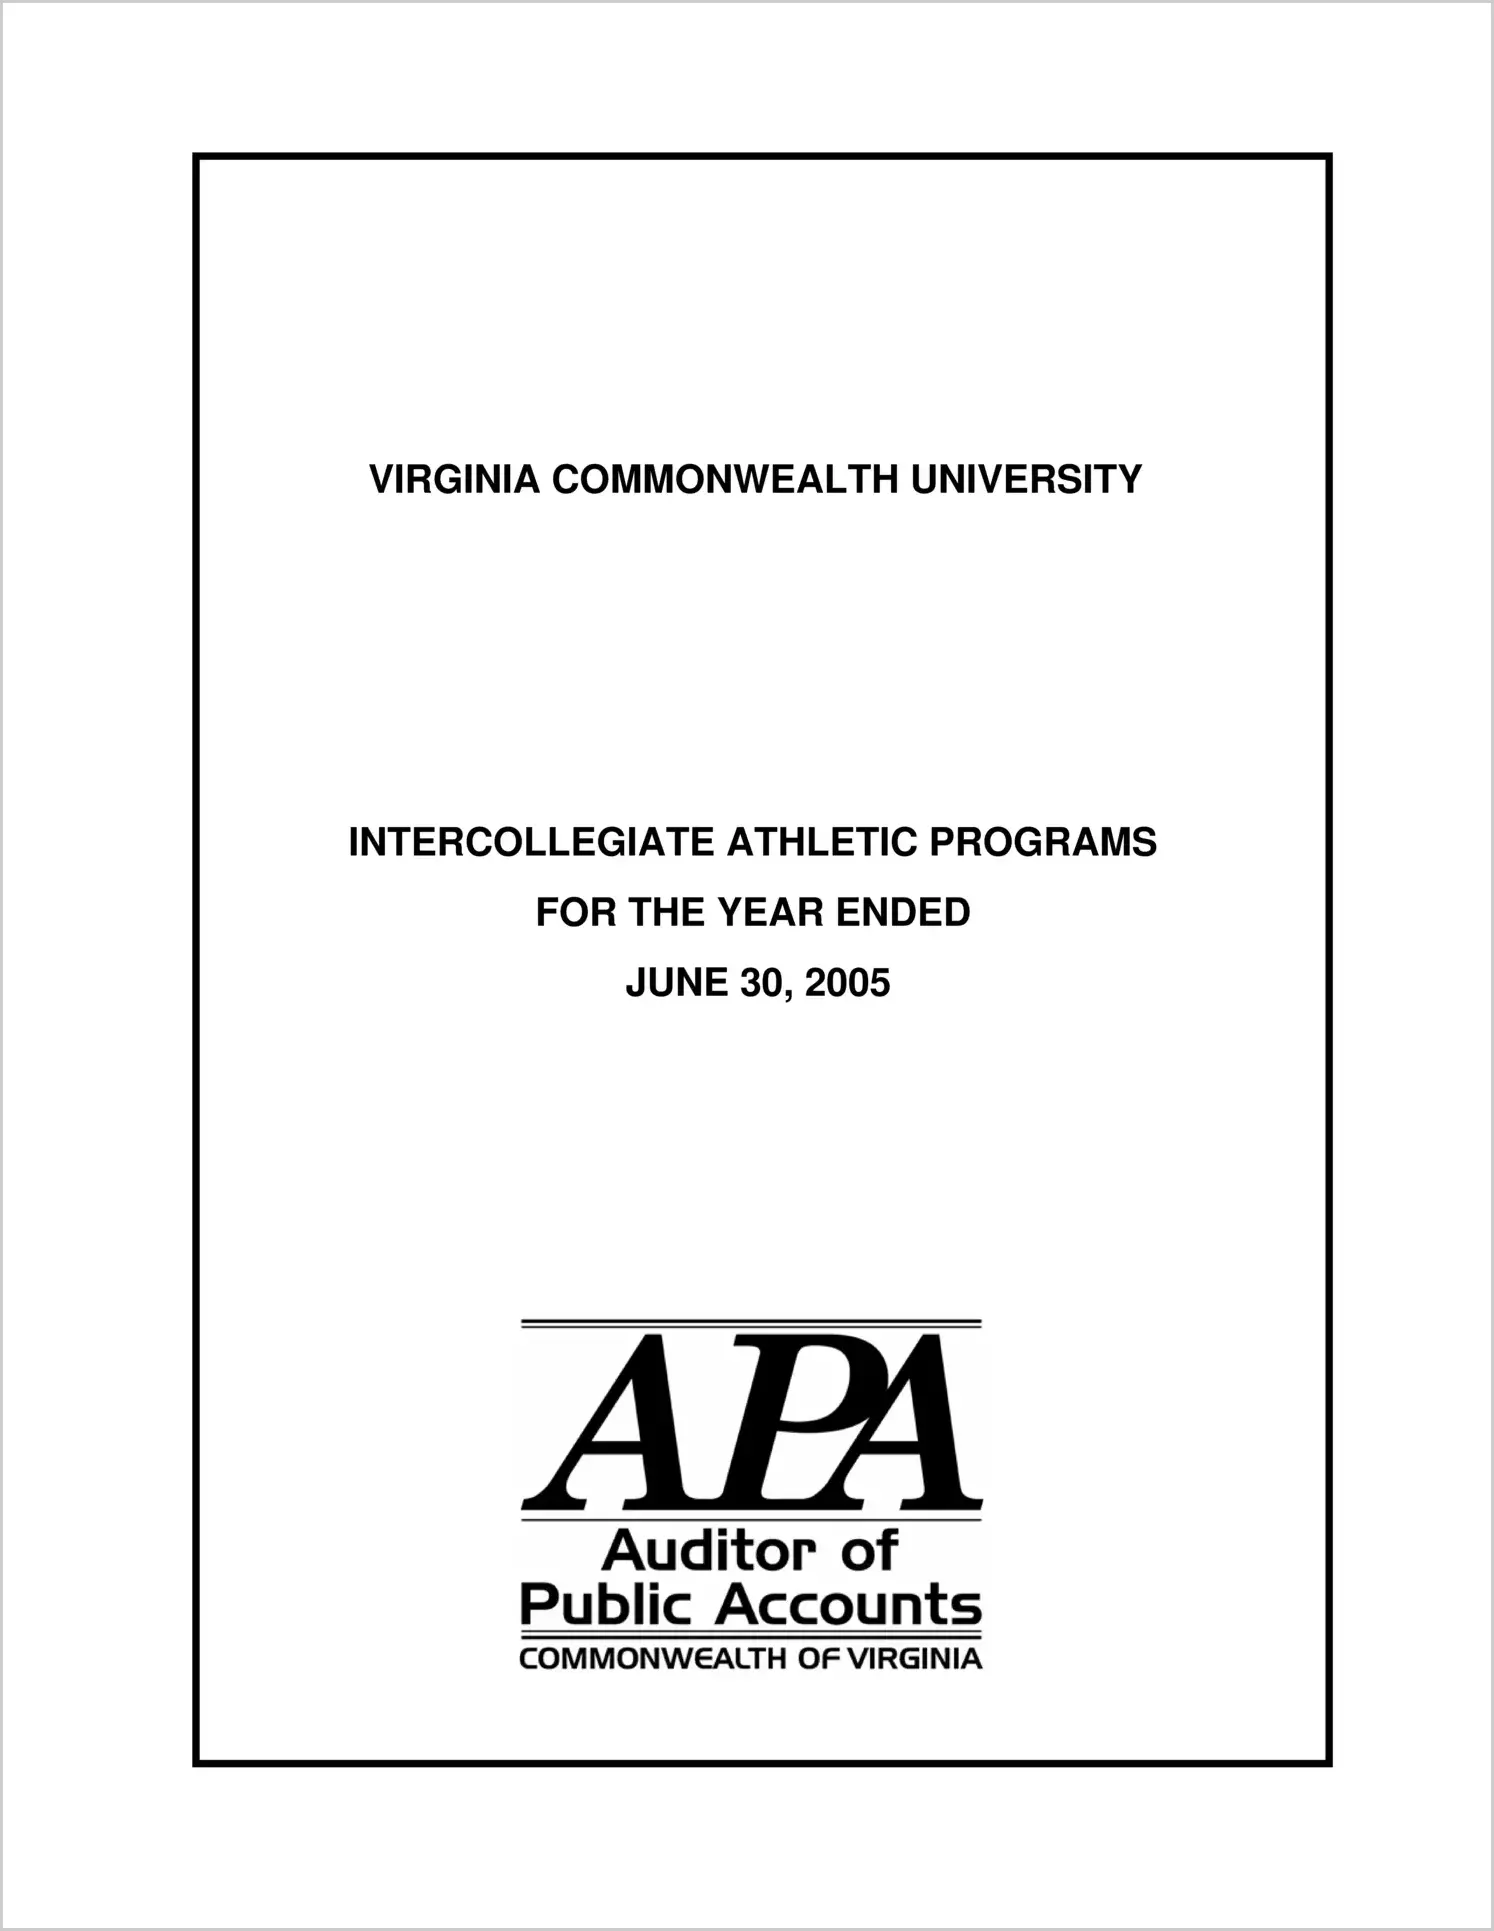 Virginia Commonwealth University Intercollegiate Athletics Programs for the year ended June 30, 2005